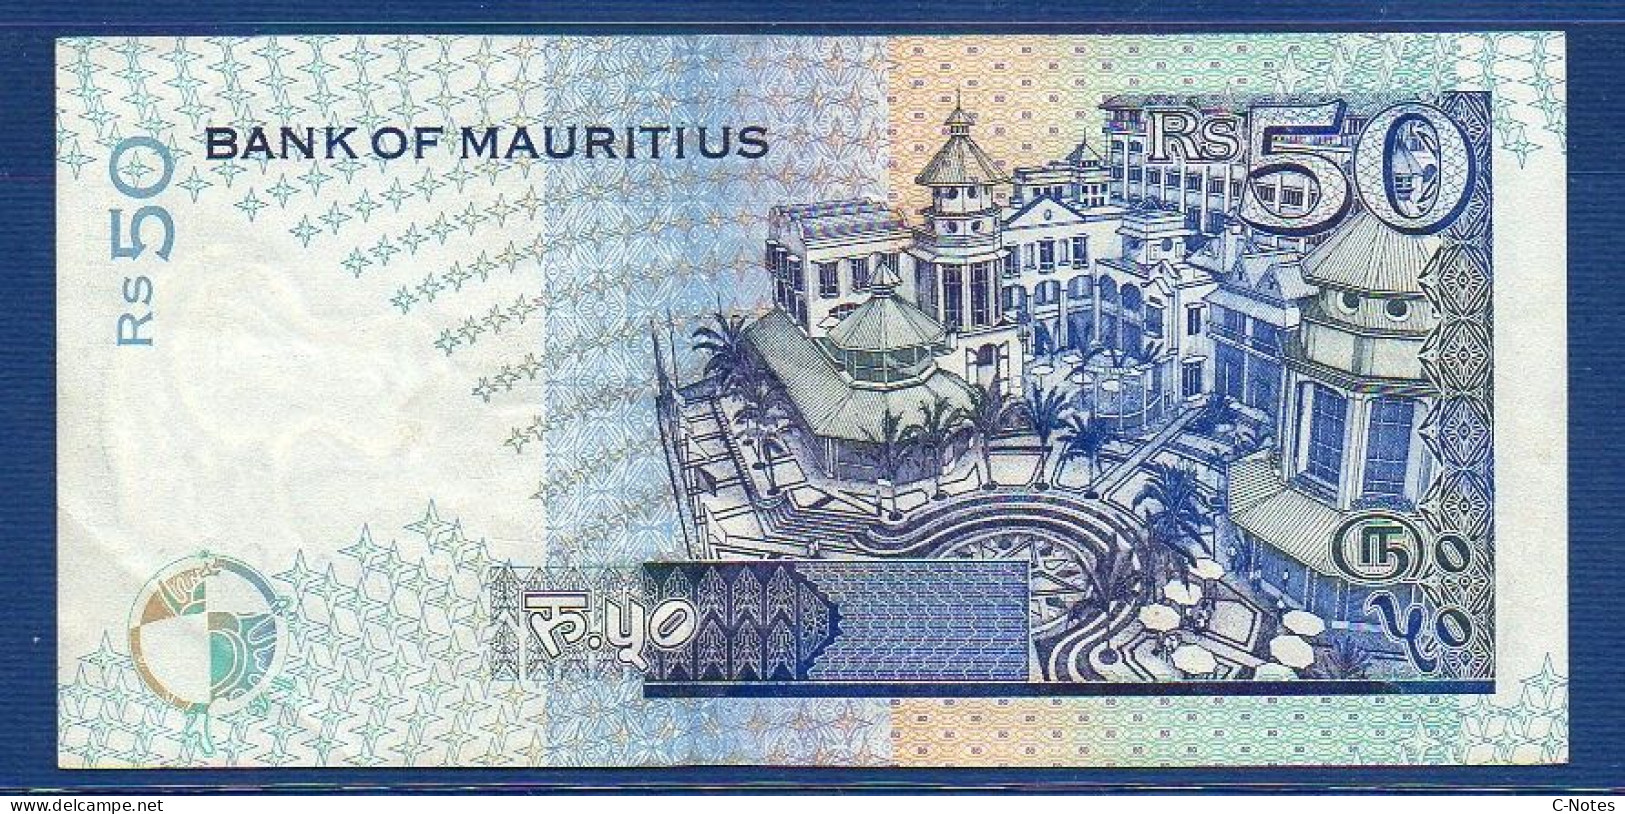 MAURITIUS - P.43 – 50 Rupees 1998 VF+, Serie BE857610 - Mauritius